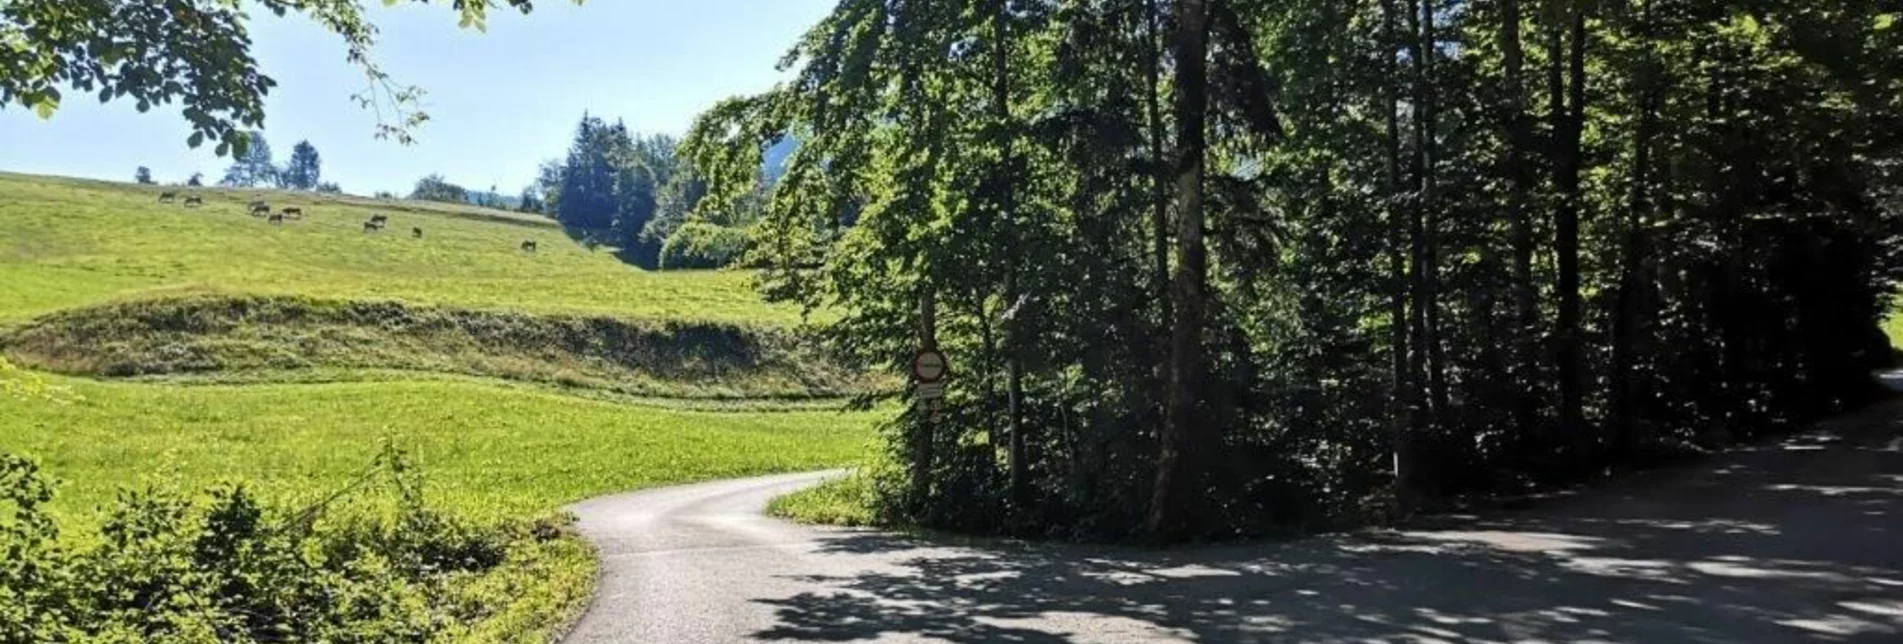 Hiking route Landler Country walk #6 - Touren-Impression #1 | © TV Gesäuse